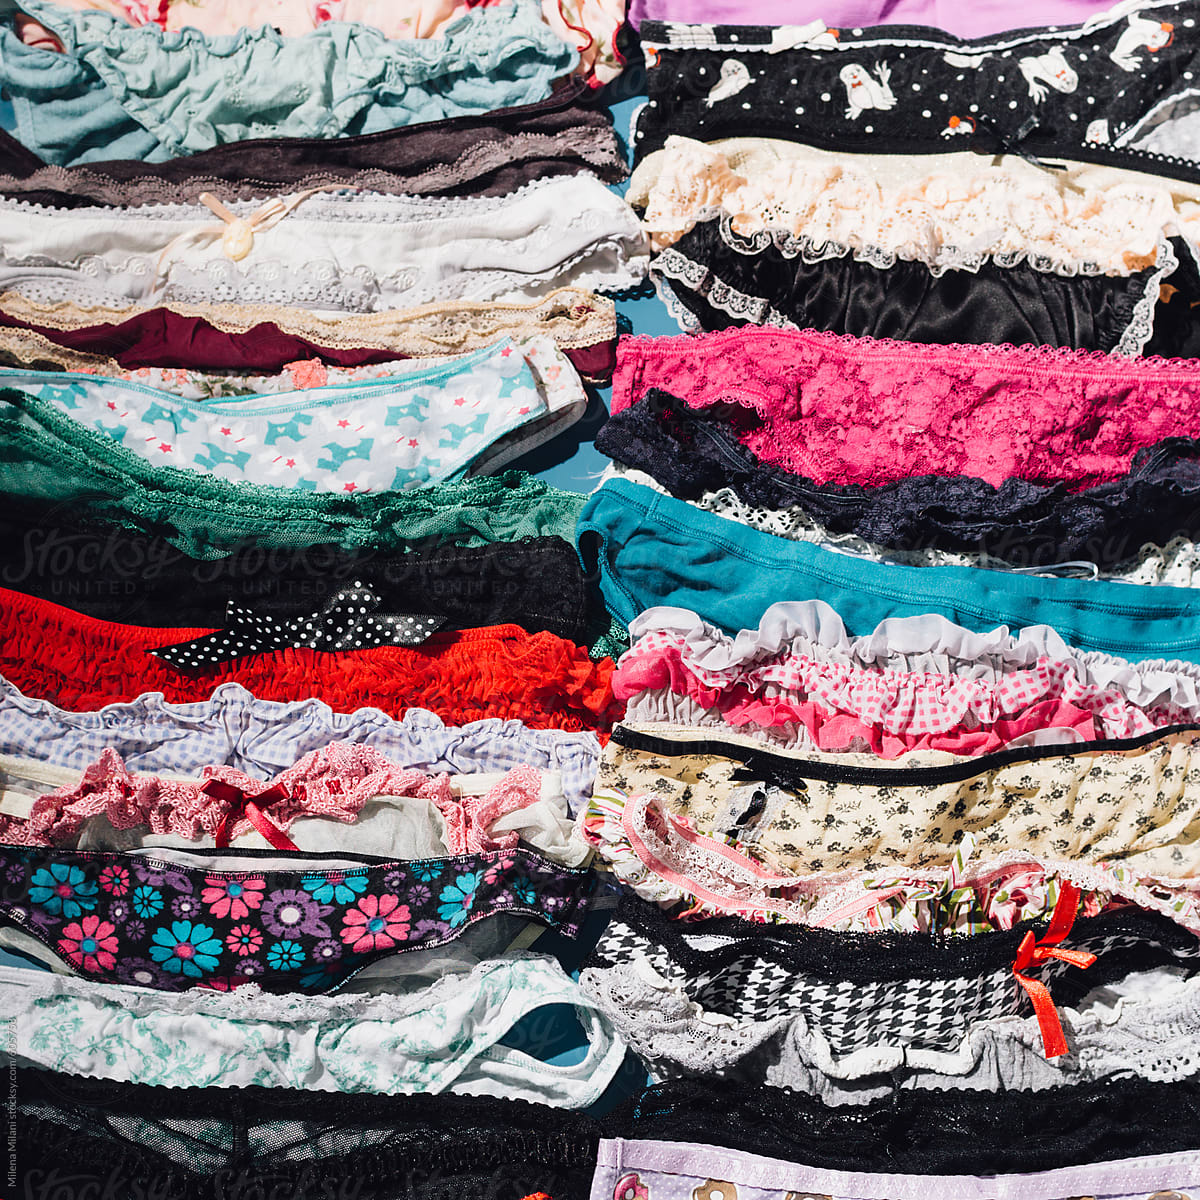 Panties Collection by Stocksy Contributor Milena Milani - Stocksy